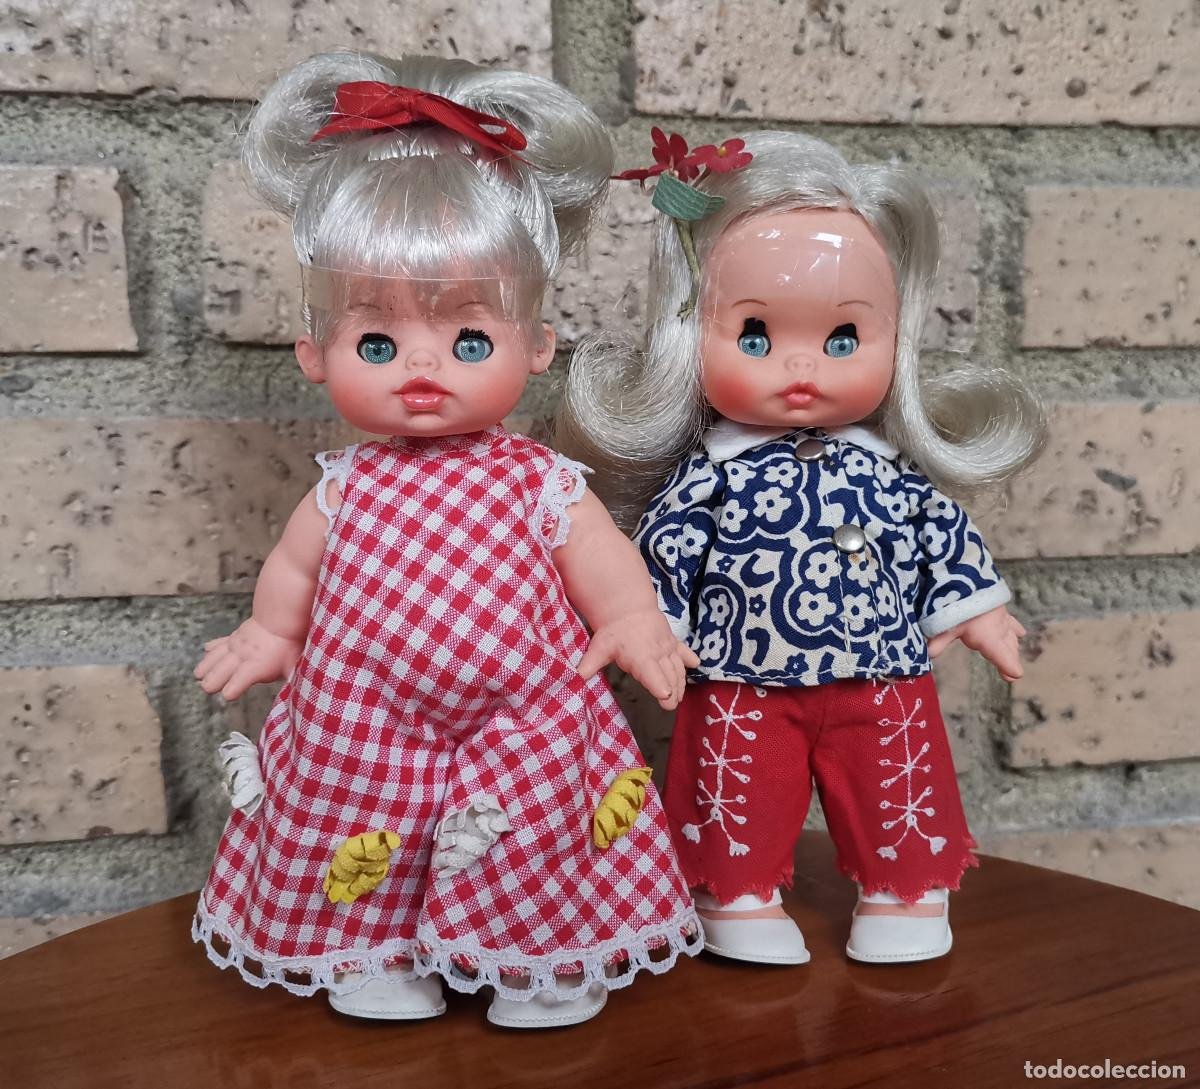 muñeco gusiluz, sin mecanismo, 2 caras. - Buy Other international dolls on  todocoleccion